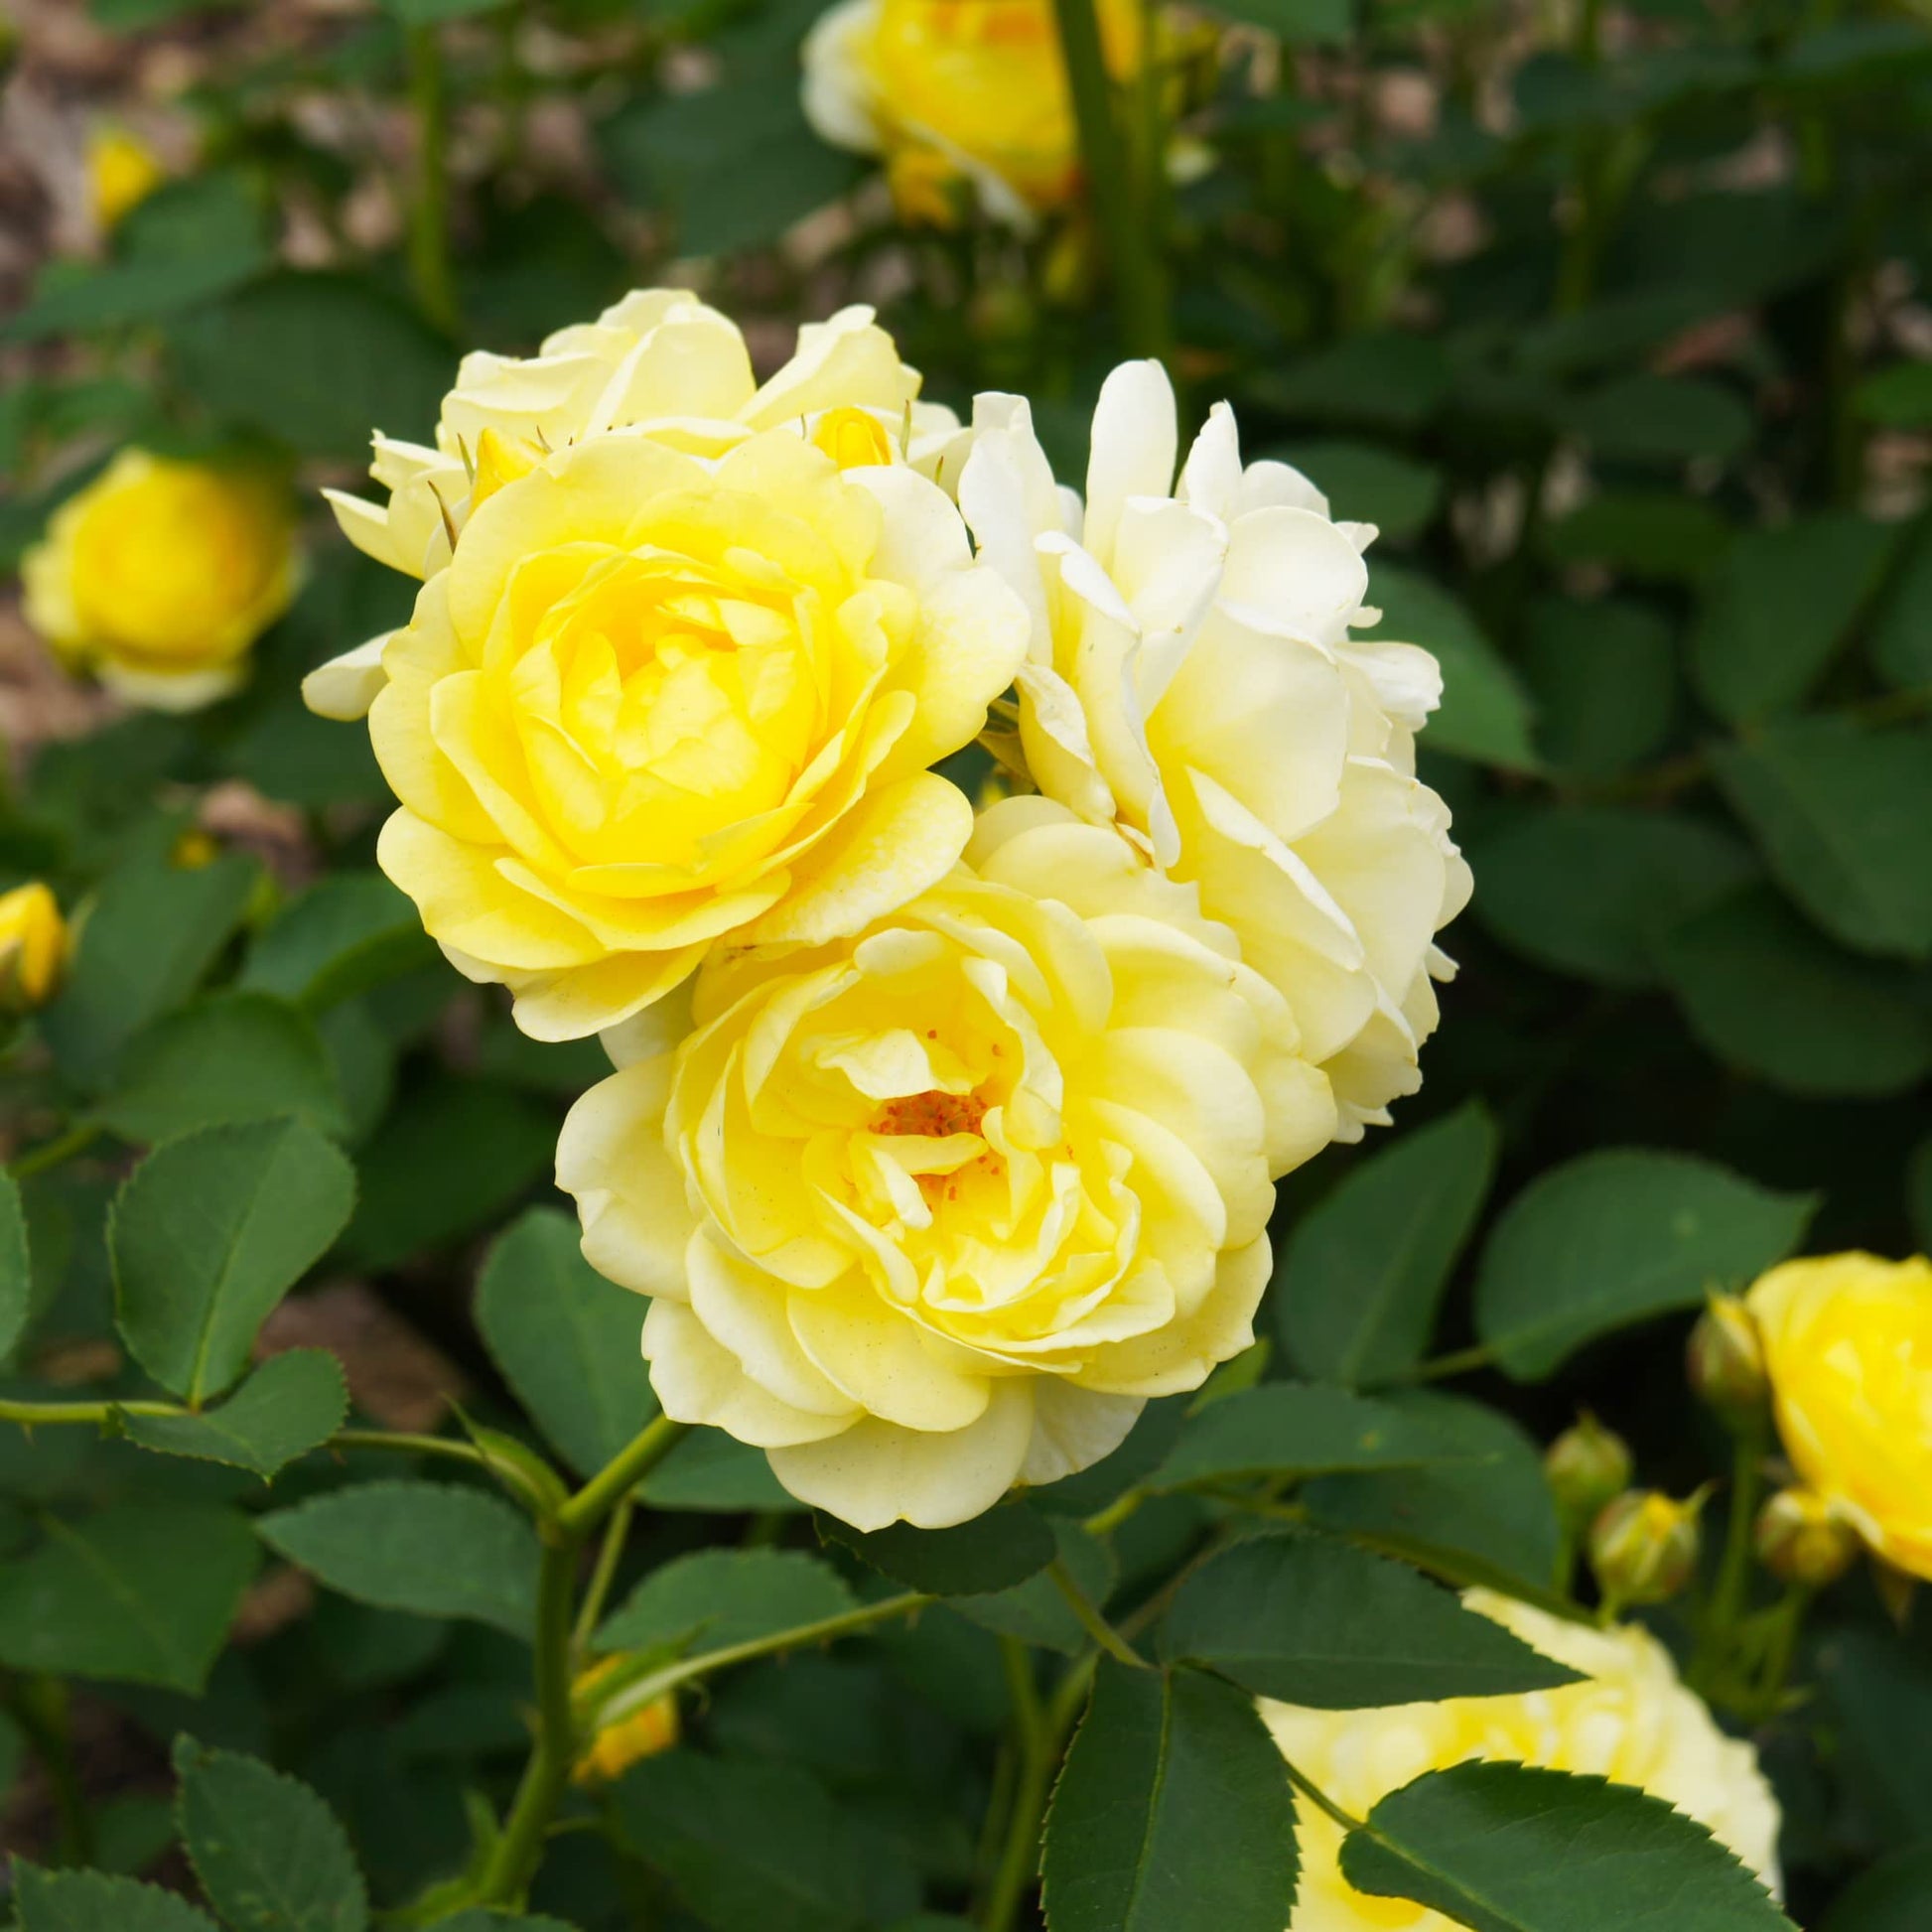 Rose Plants - Floribunda - 'Mountbatten' - 1 x Full Plant in 5L Pot - AcquaGarden